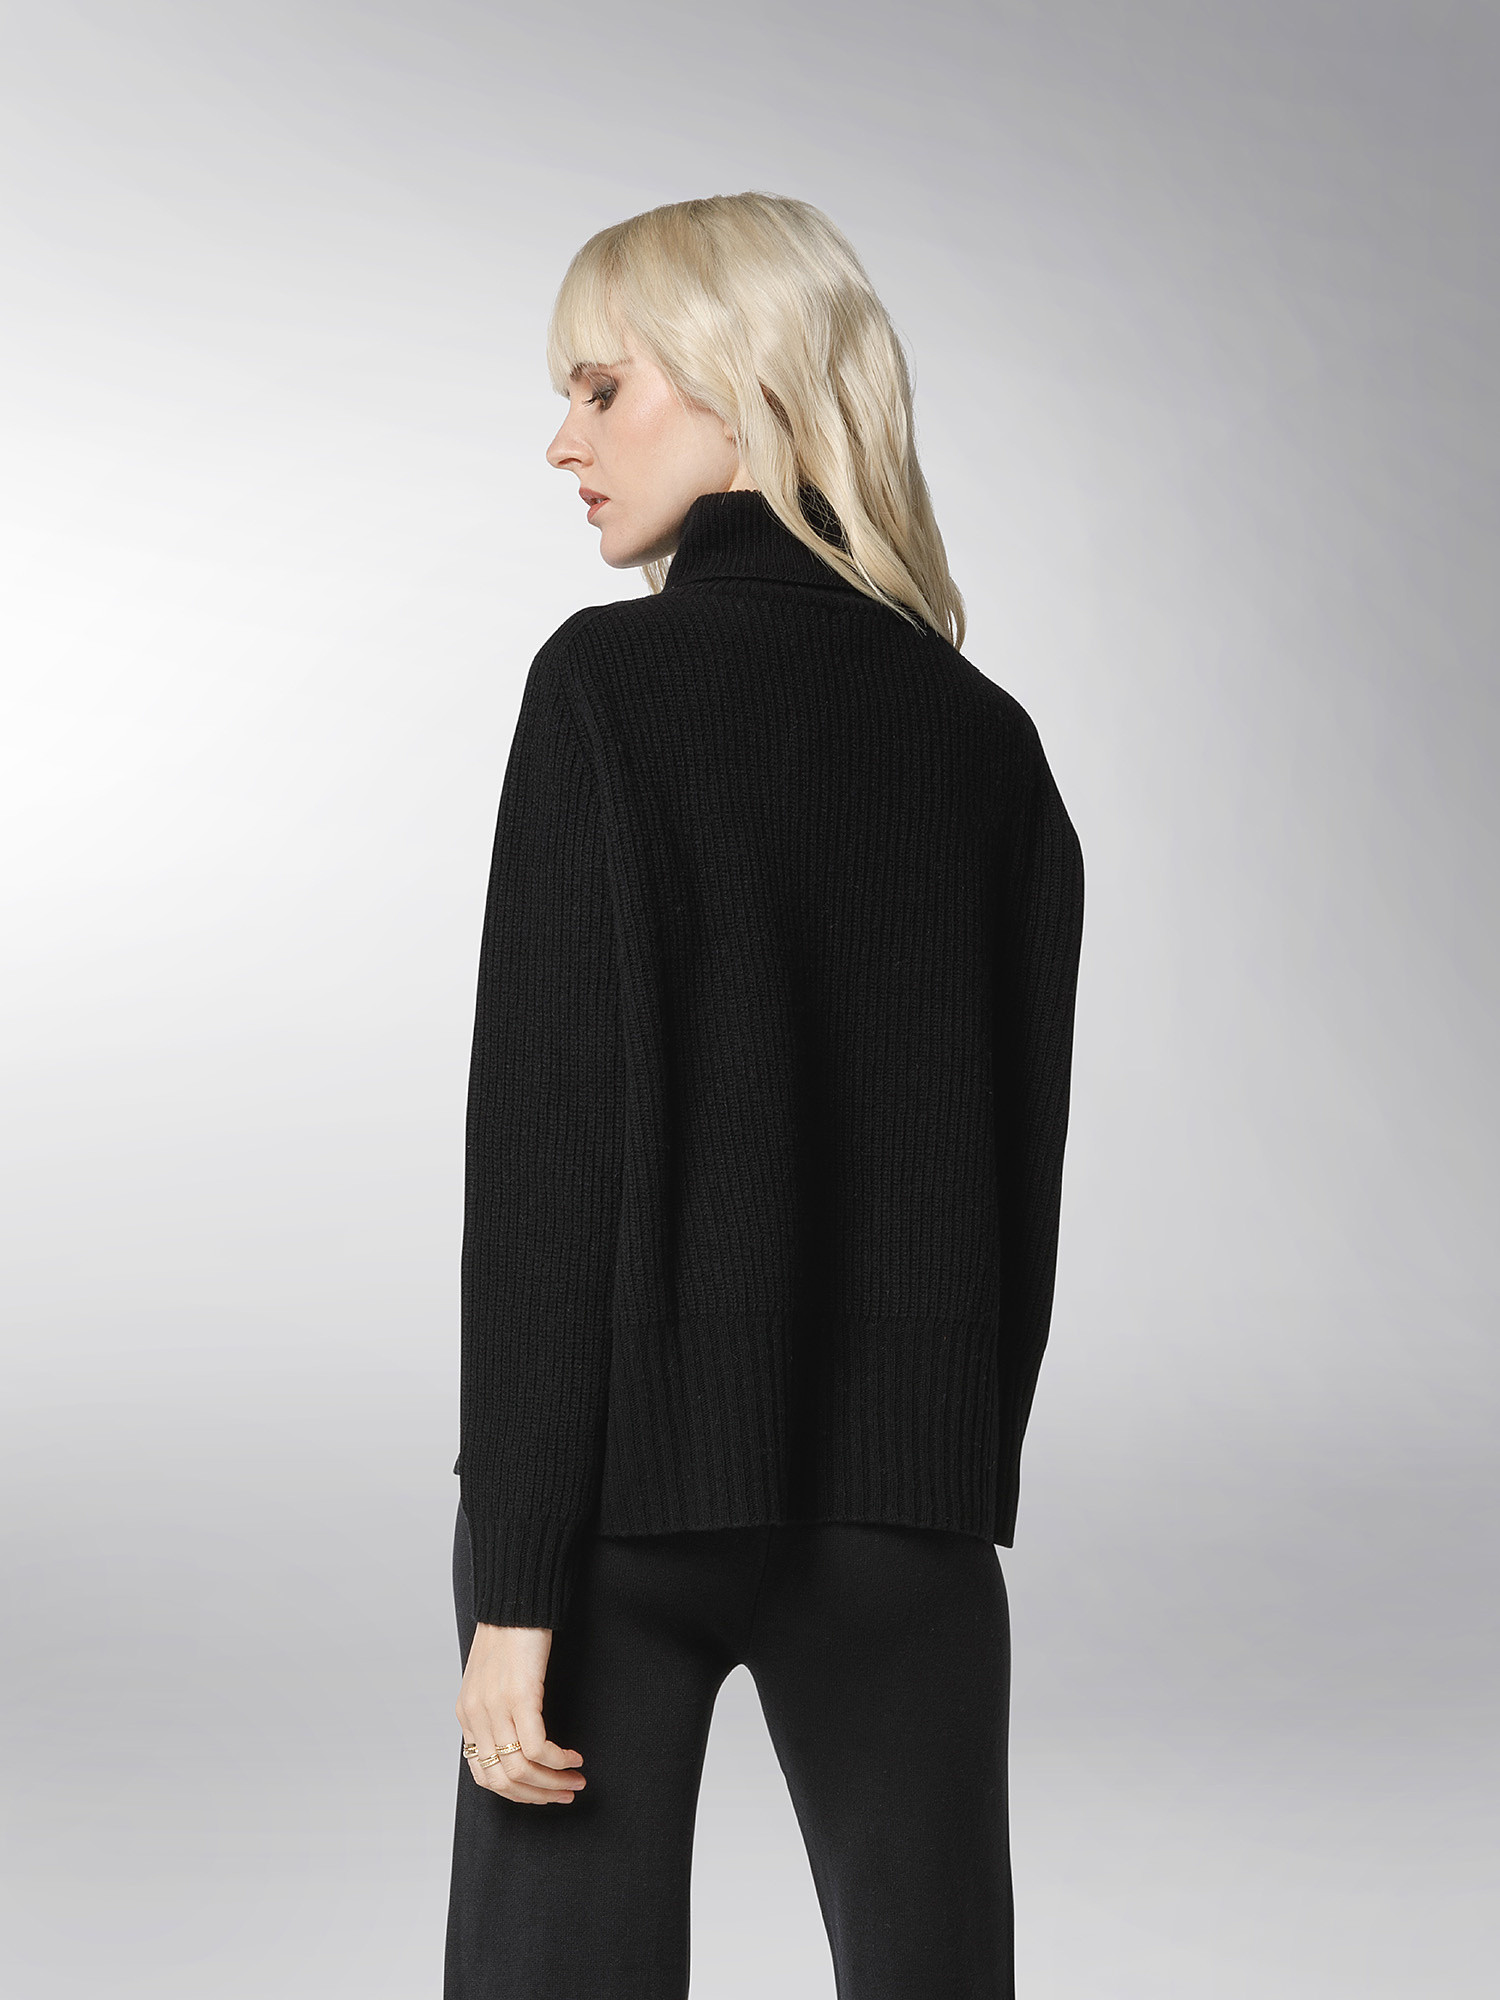 K Collection - Carded wool turtleneck pullover, Black, large image number 4